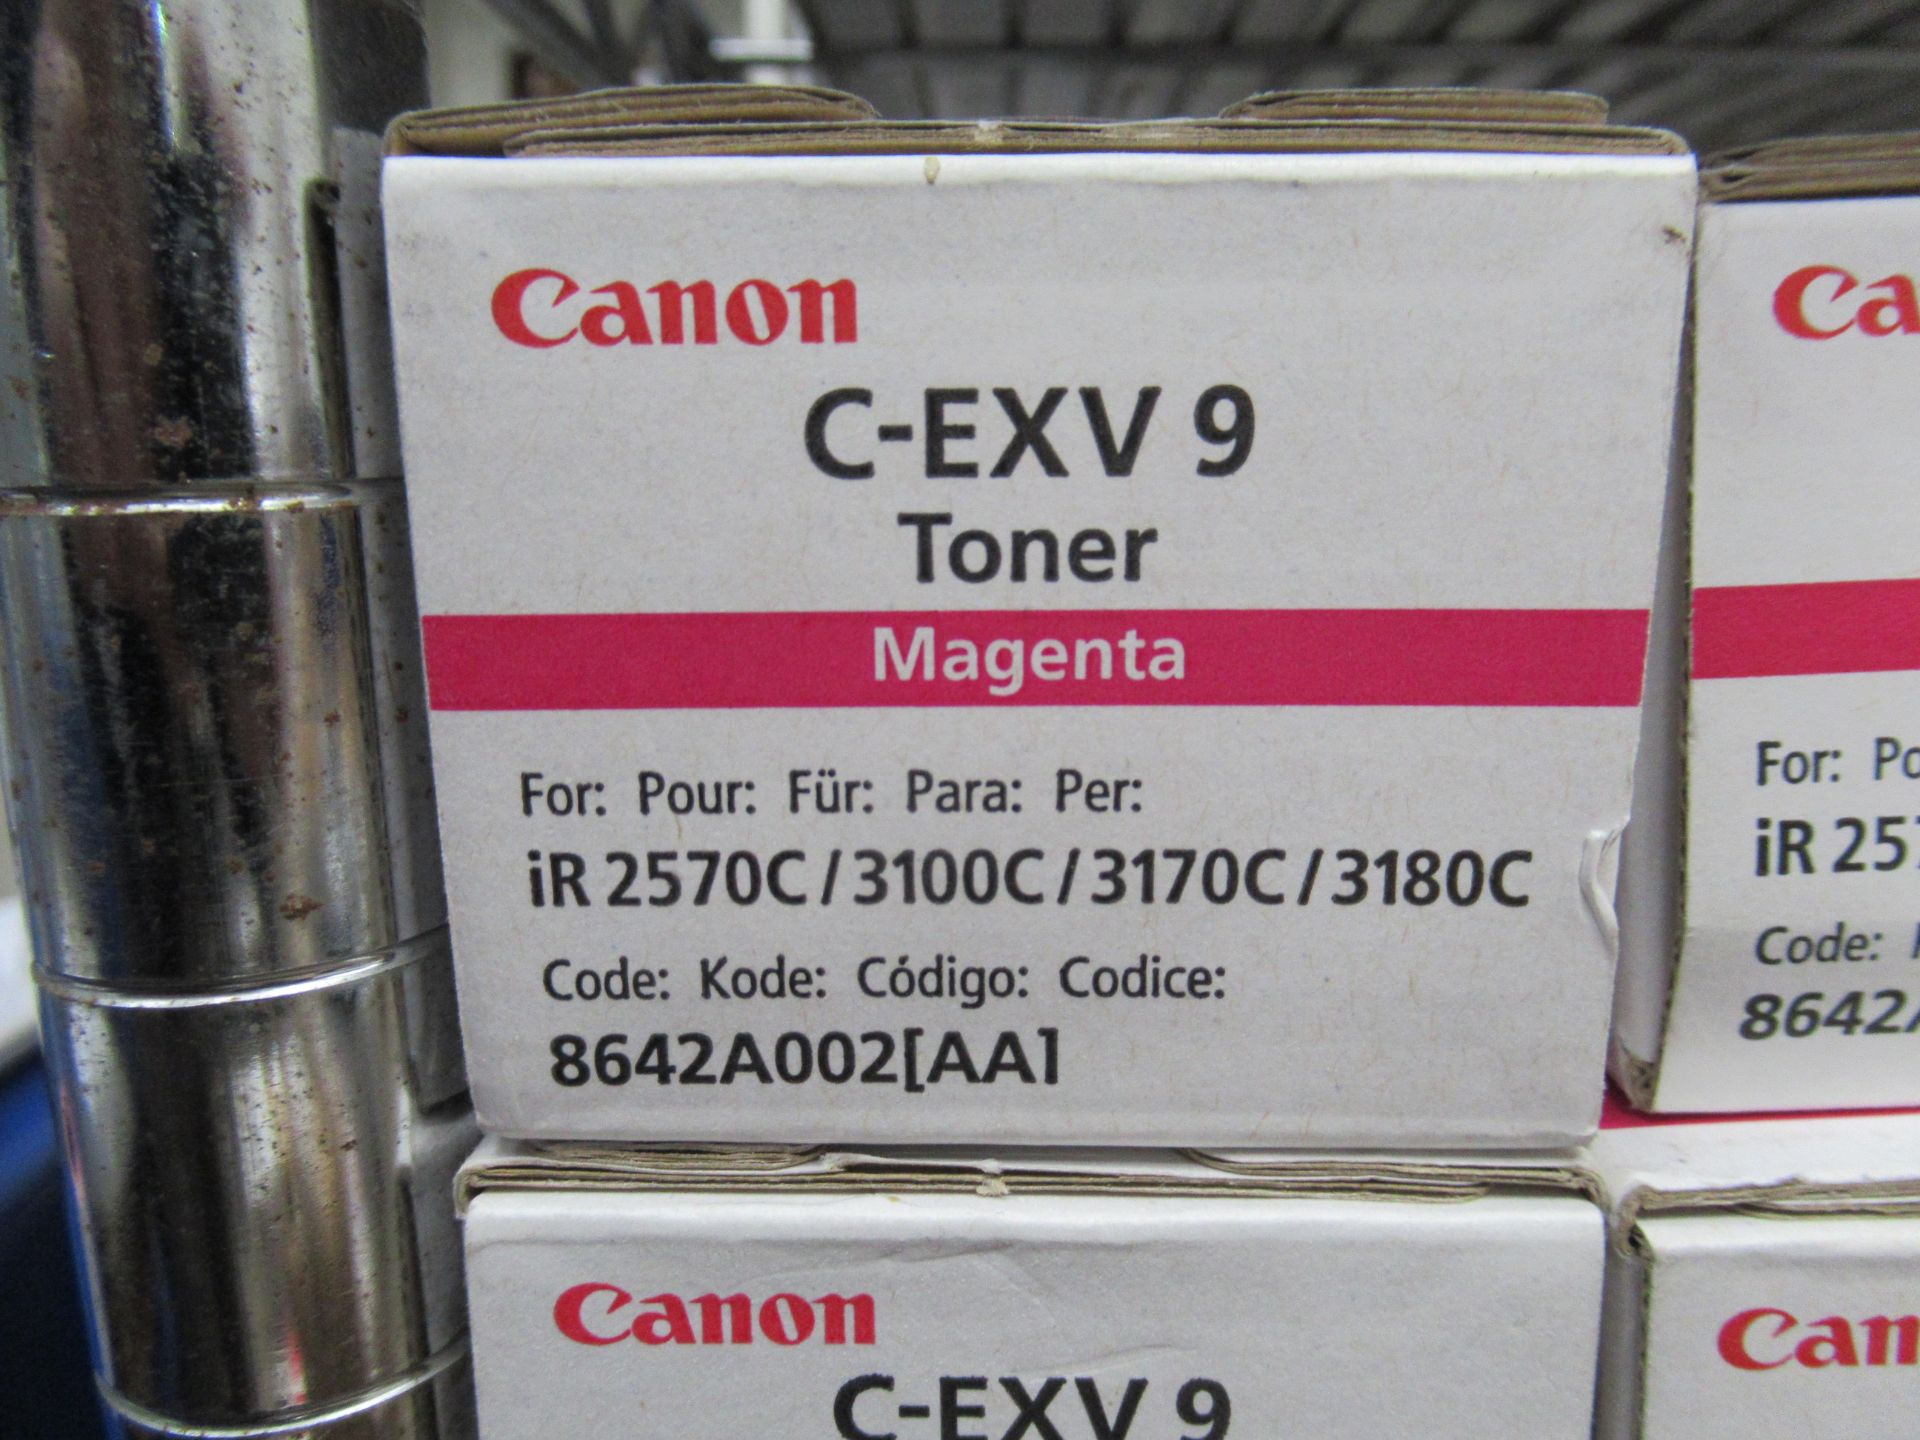 26x Canon C-EXV9 Toner Cartridges - Image 2 of 4